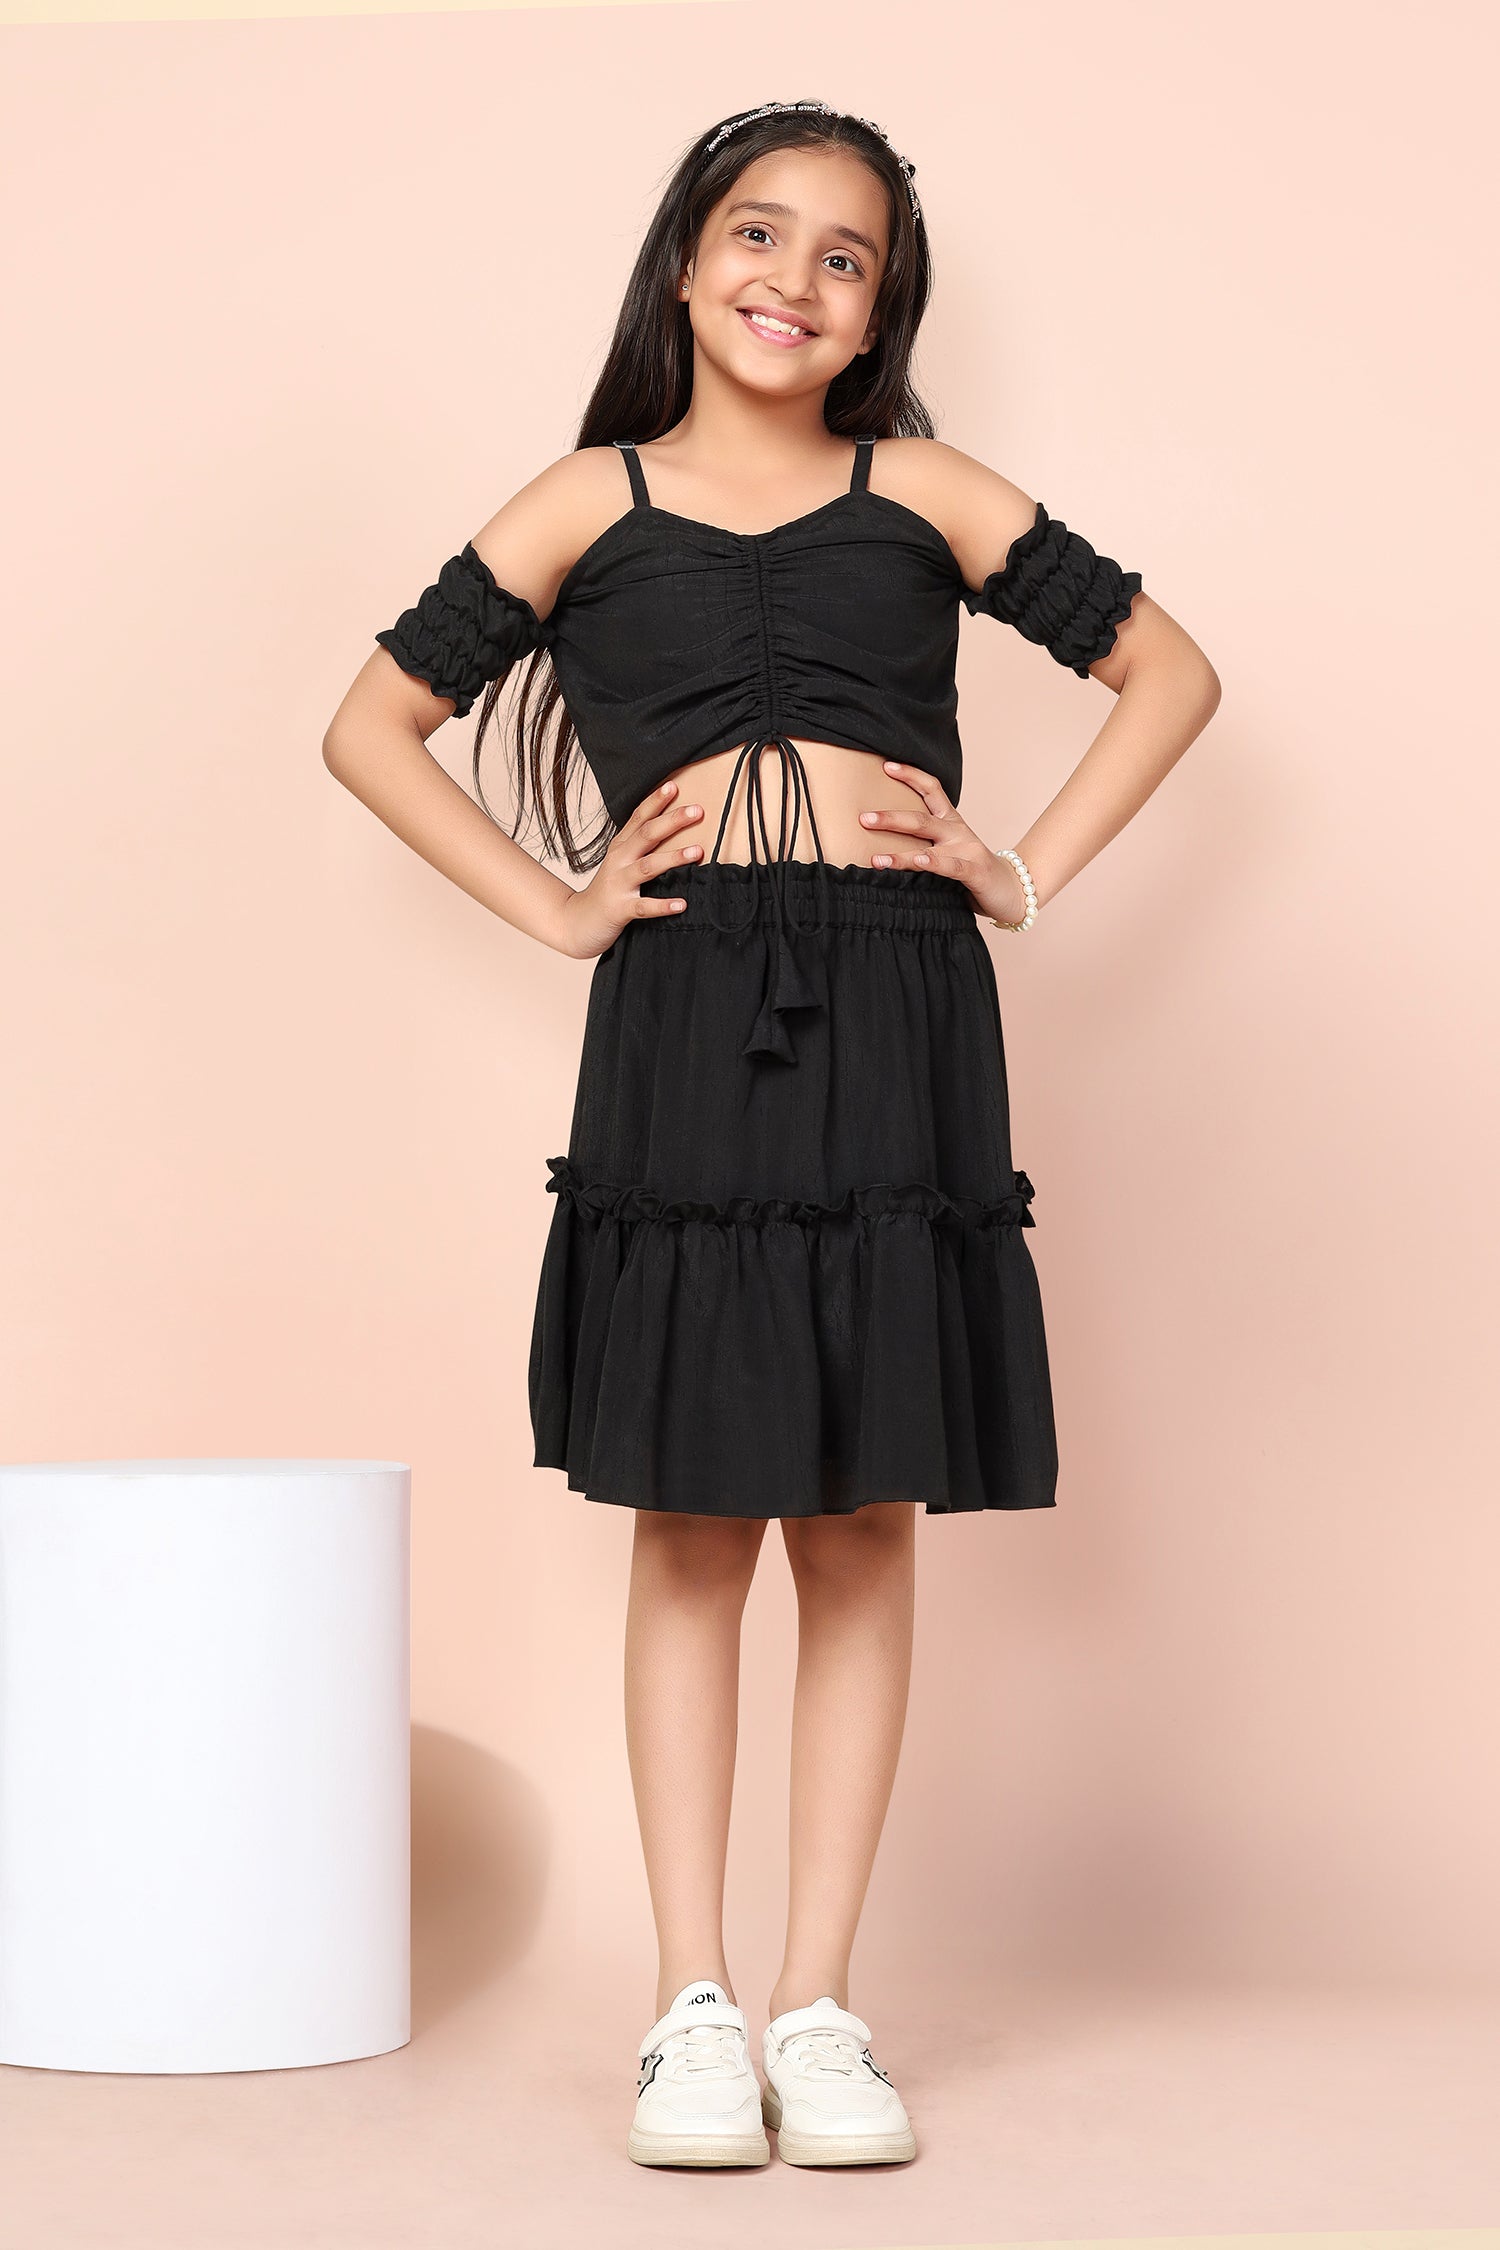 Girls Long Senior Graduation Black Prom Dresses Crop Top with Sleeves –  Siaoryne